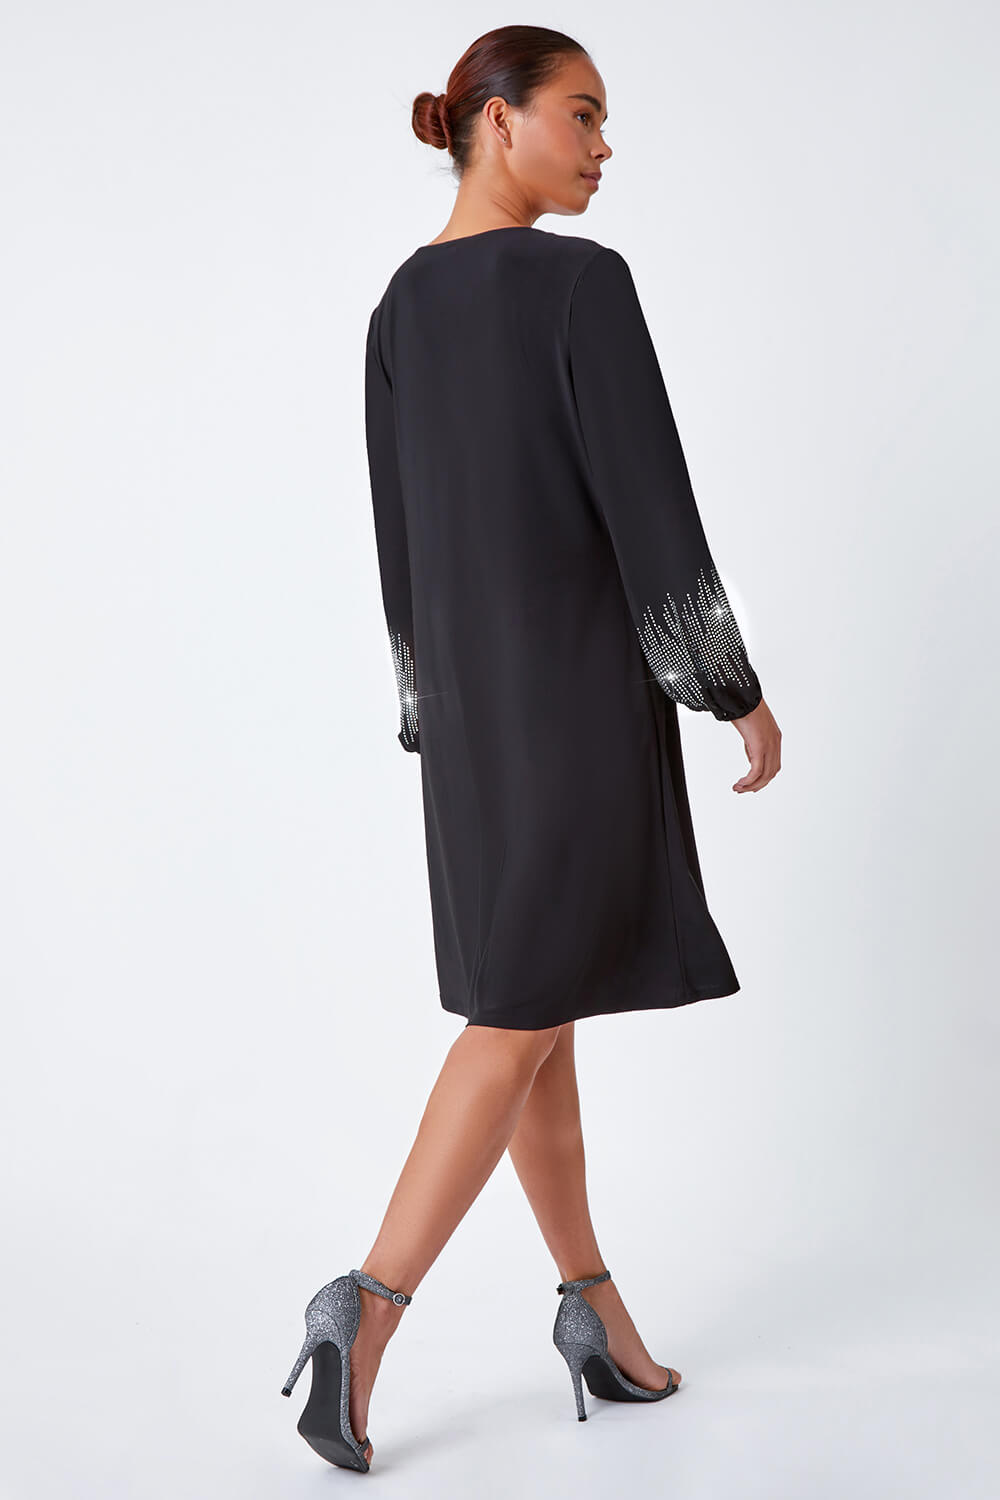 Black Petite Sparkle Sleeve Stretch Dress, Image 3 of 5